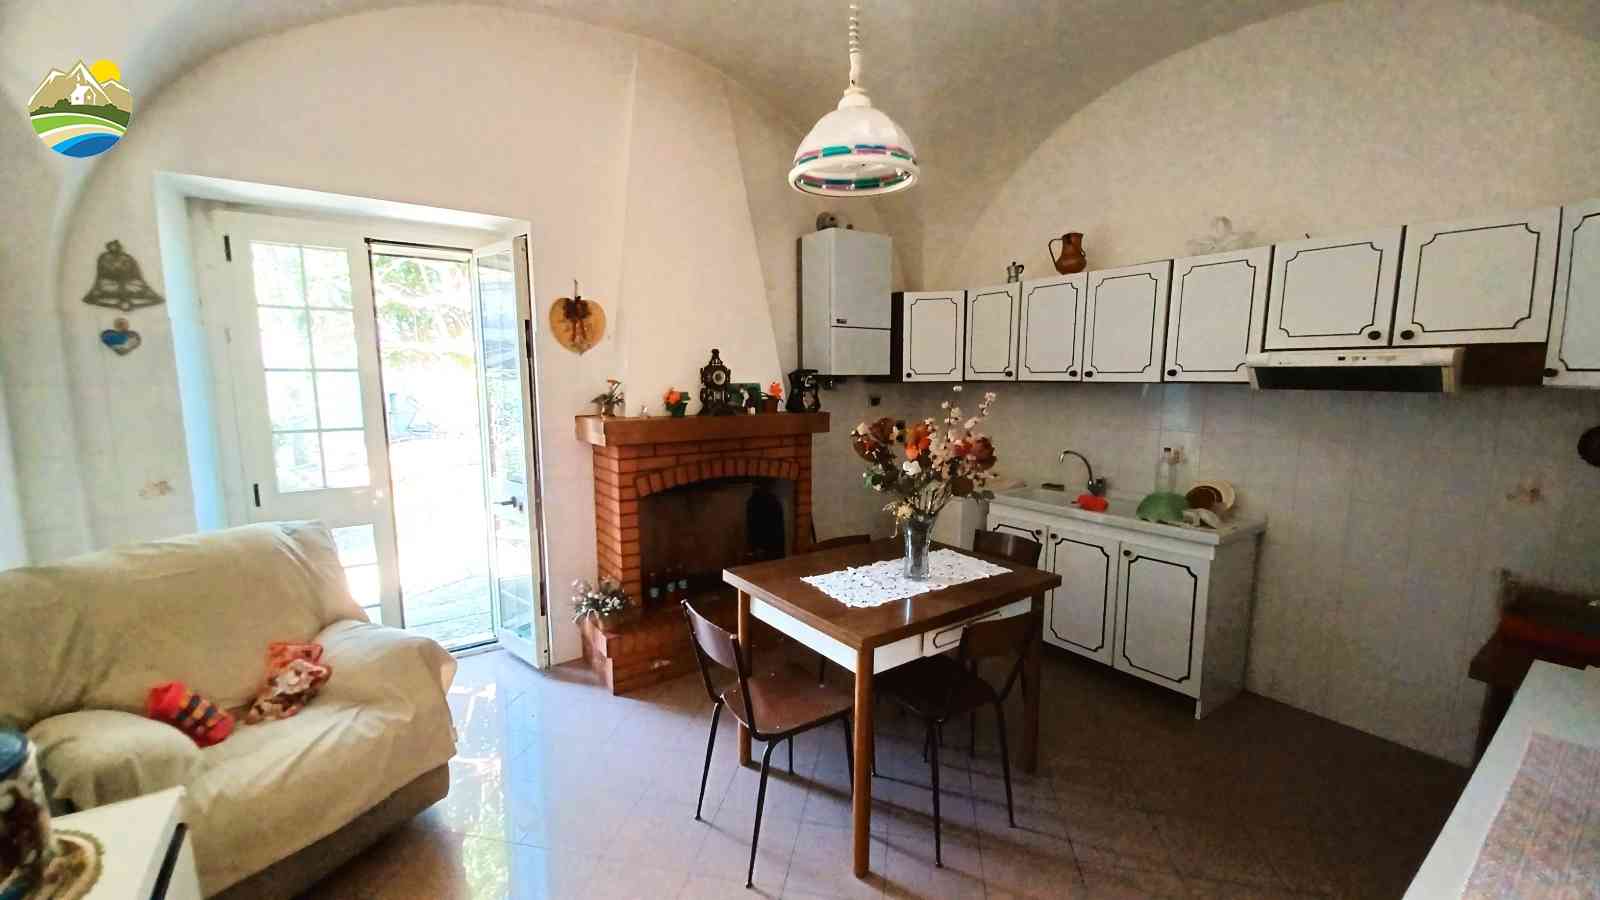 Casa in paese Casa in paese in vendita Picciano (PE), Casa Rondine - Picciano - EUR 88.783 640